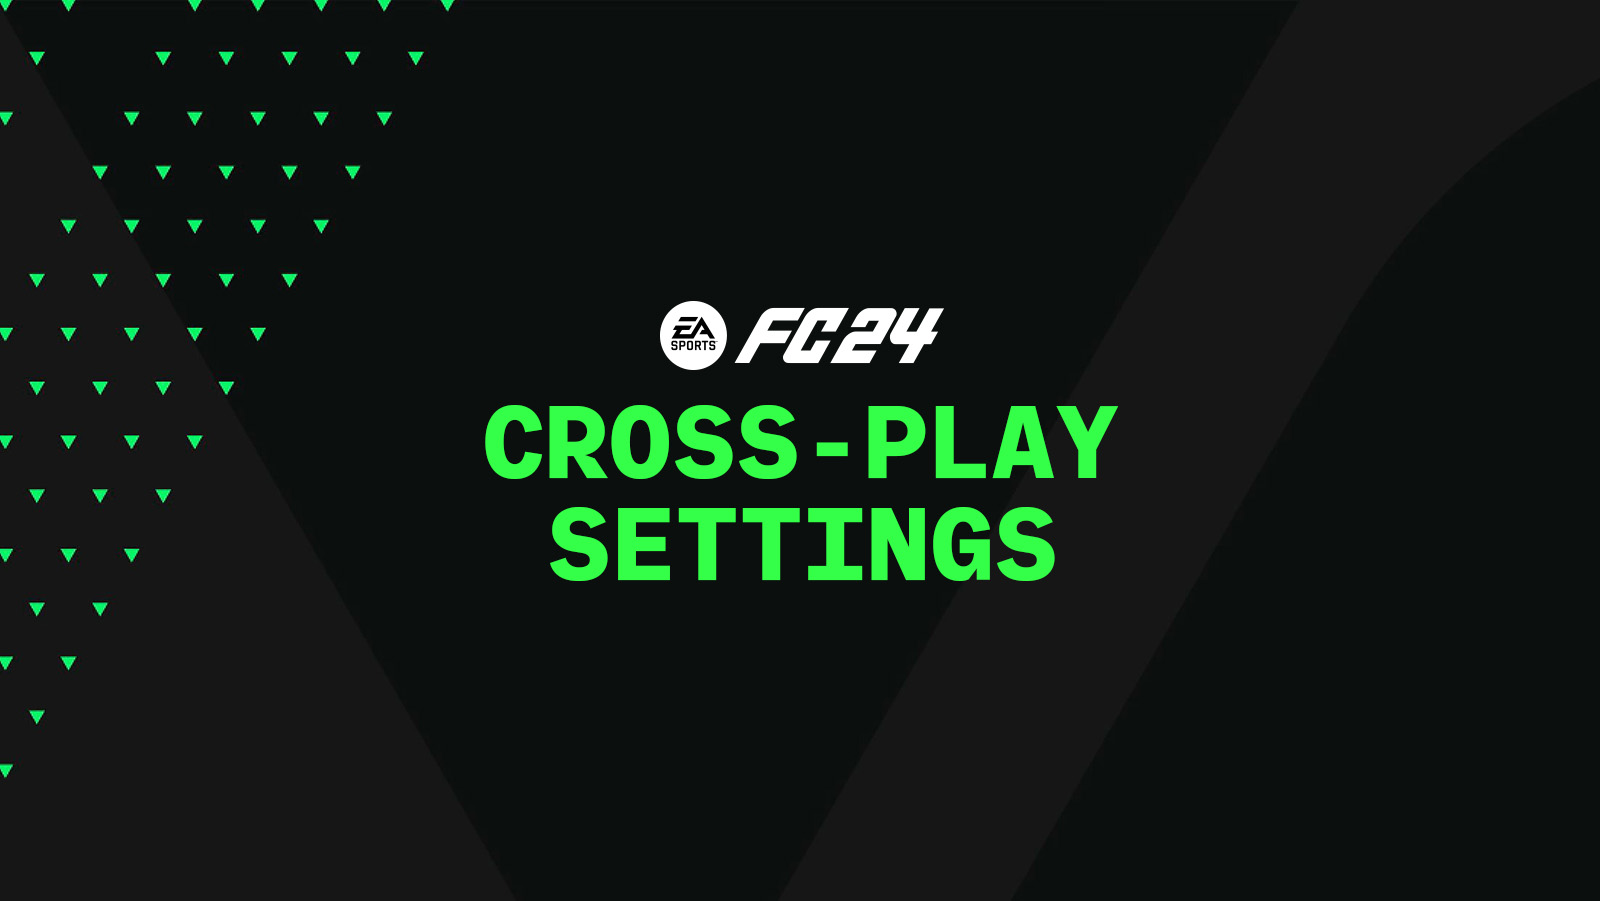 FC 24 Crossplay Guide